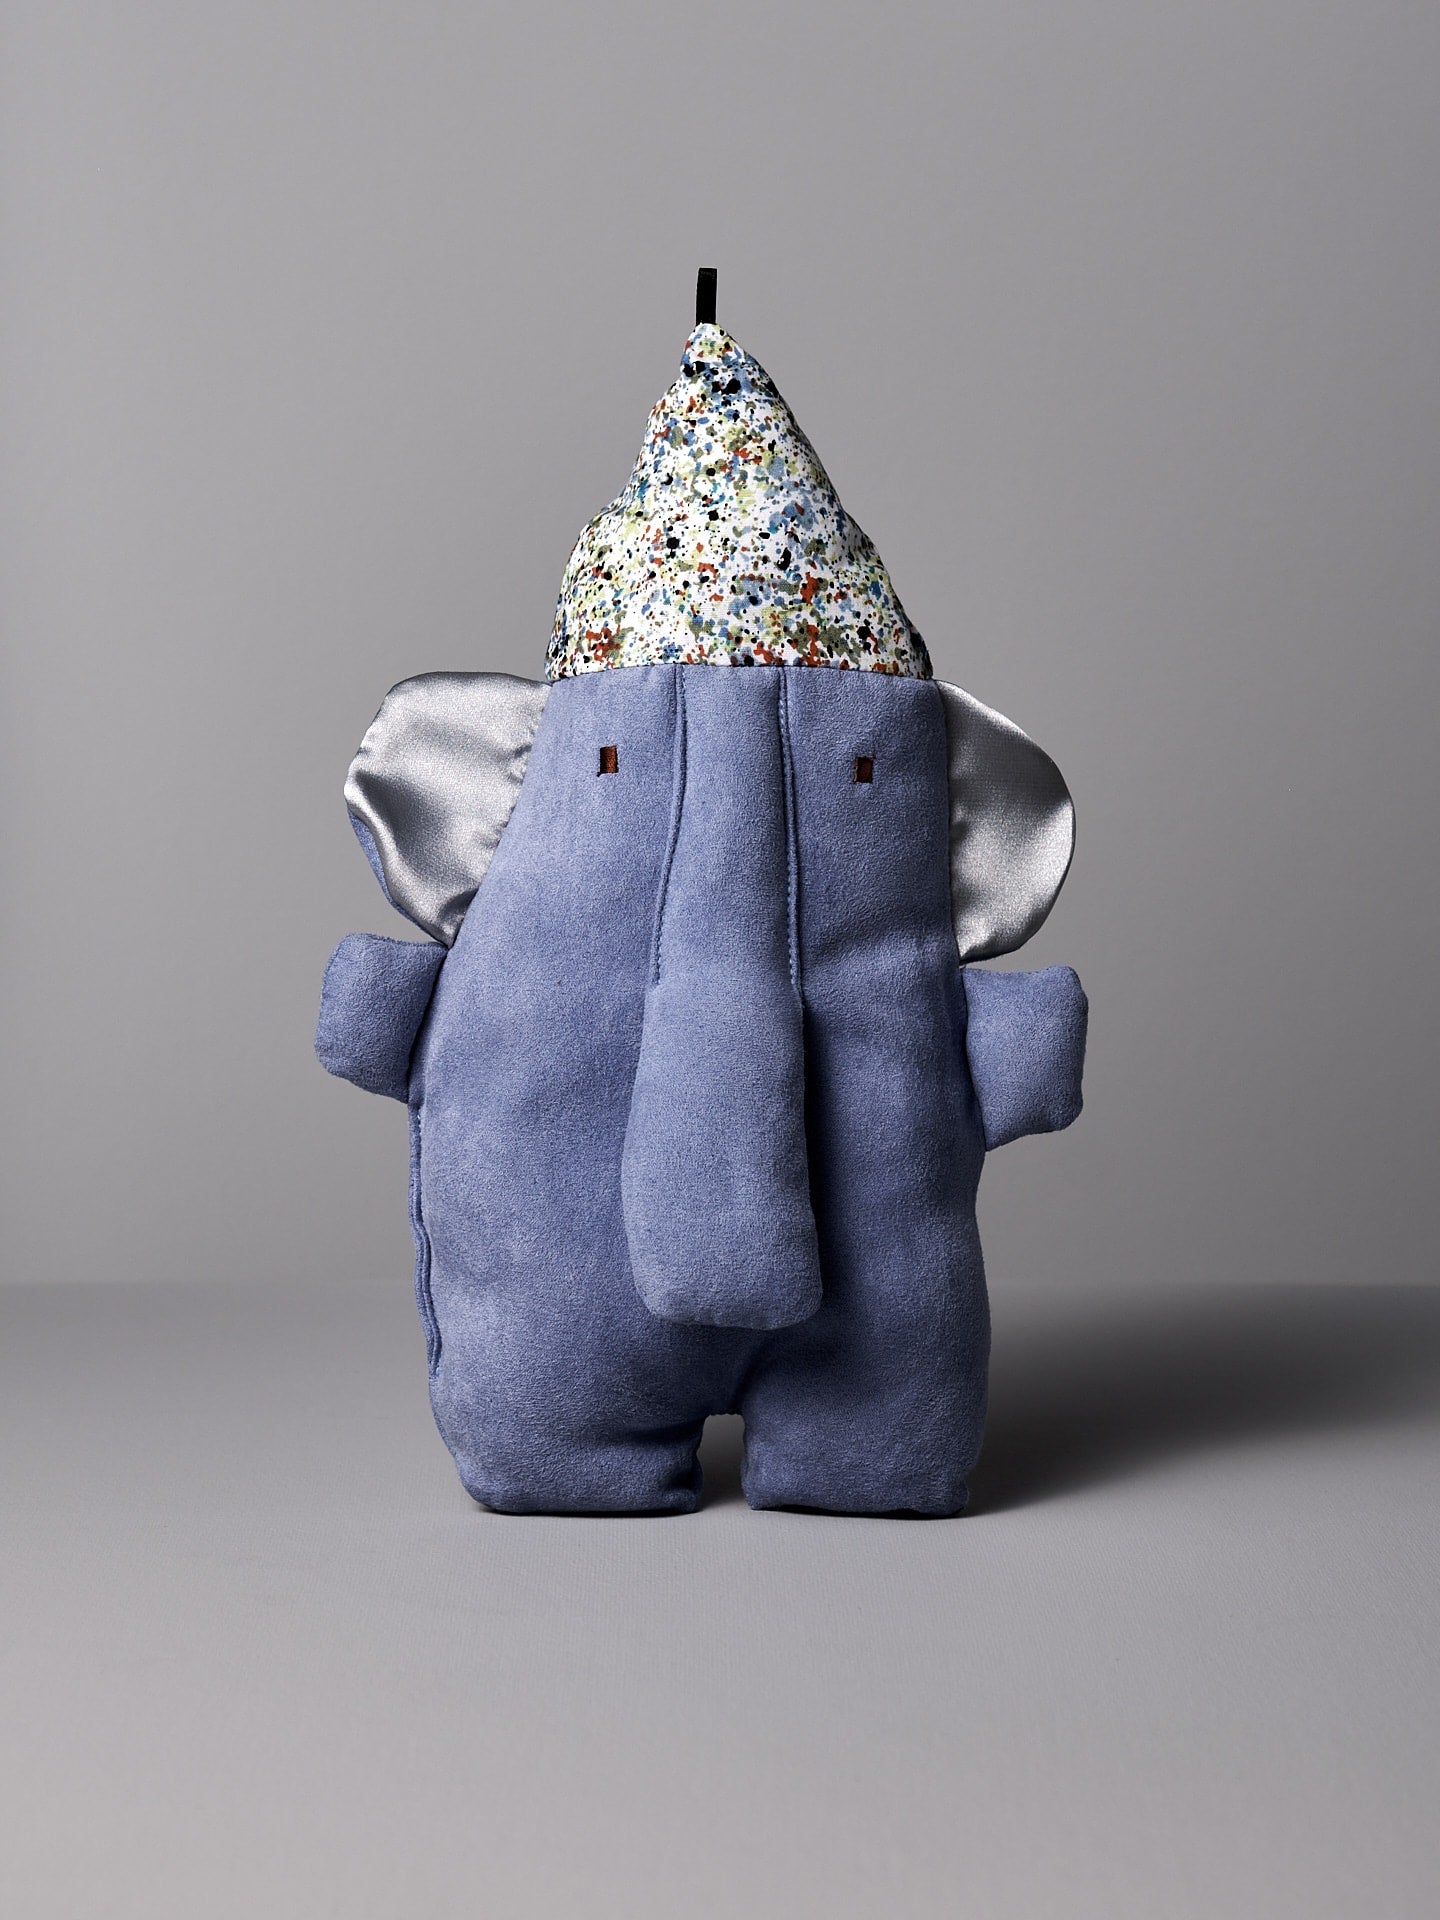 A Édith L'Élephant stuffed animal with a confetti hat by Raplapla.